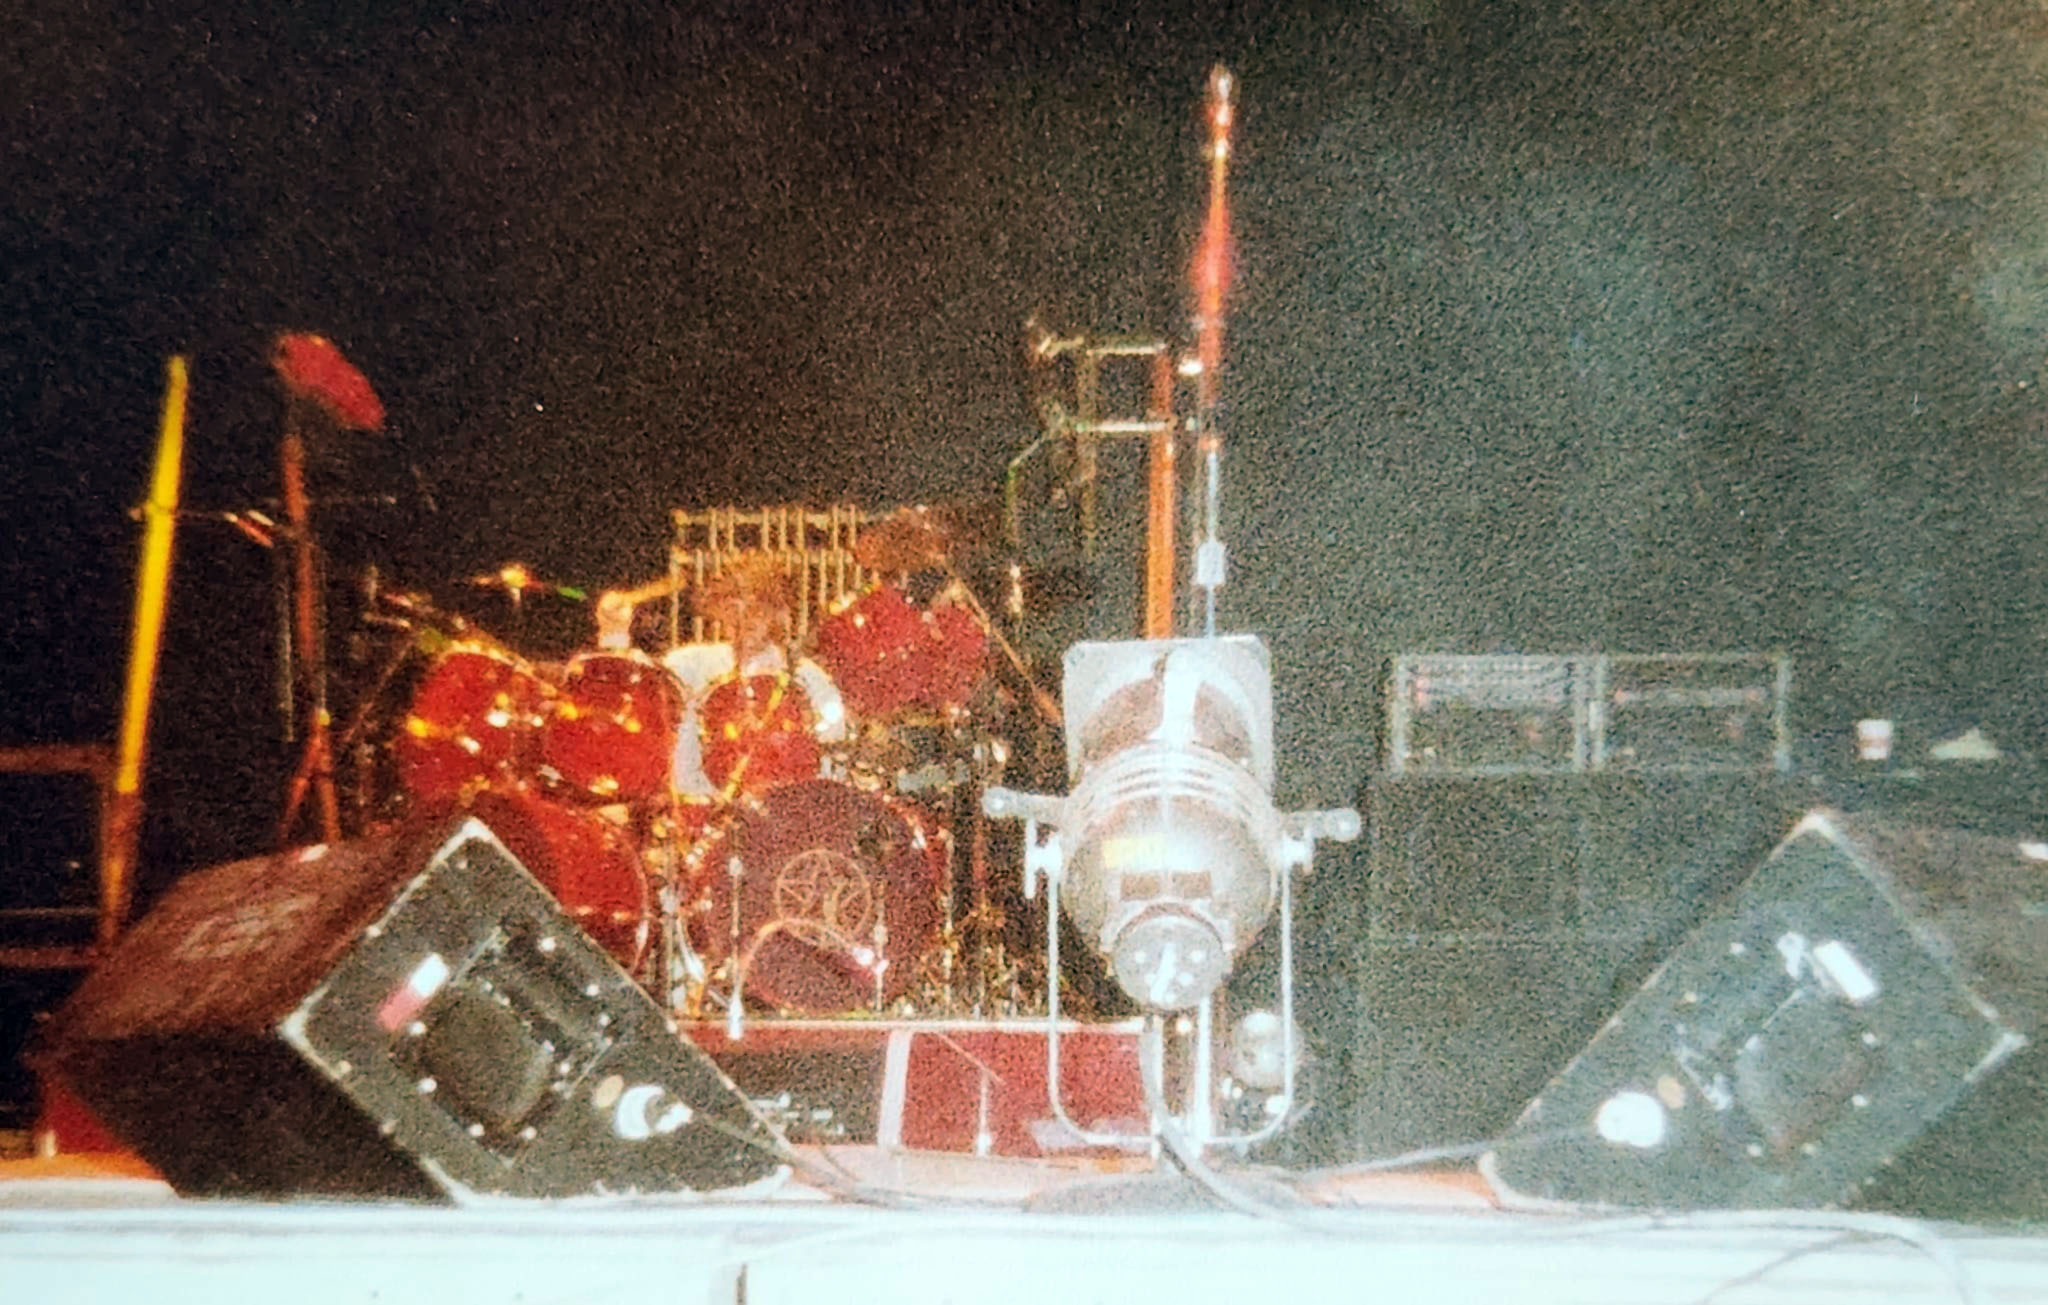 Rush Signals Tour Pictures Long Beach Arena - Long Beach, California - February 14th, 1983